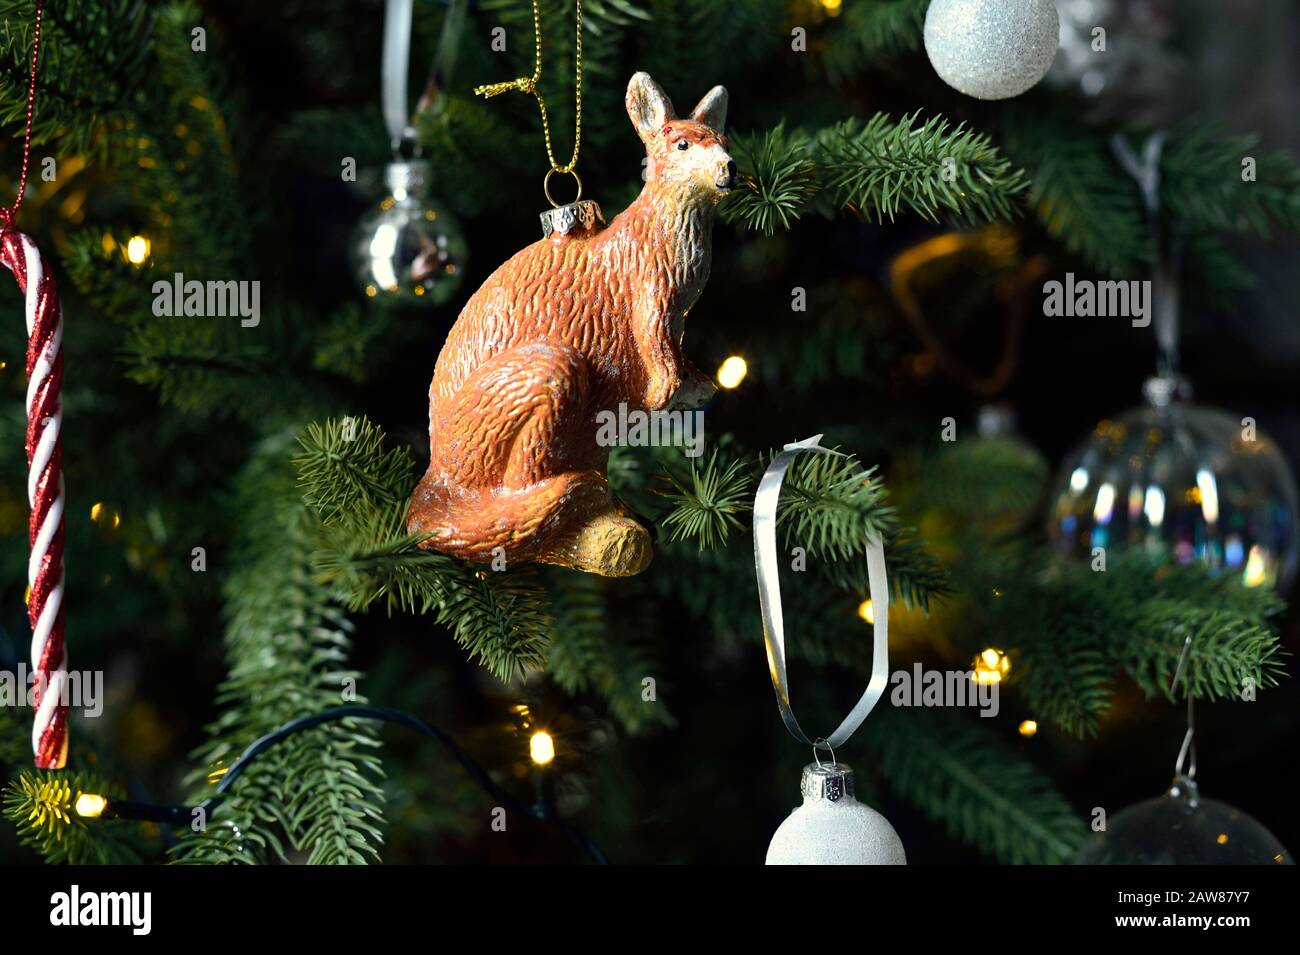 Kangaroo Christmas tree decoration Stock Photo